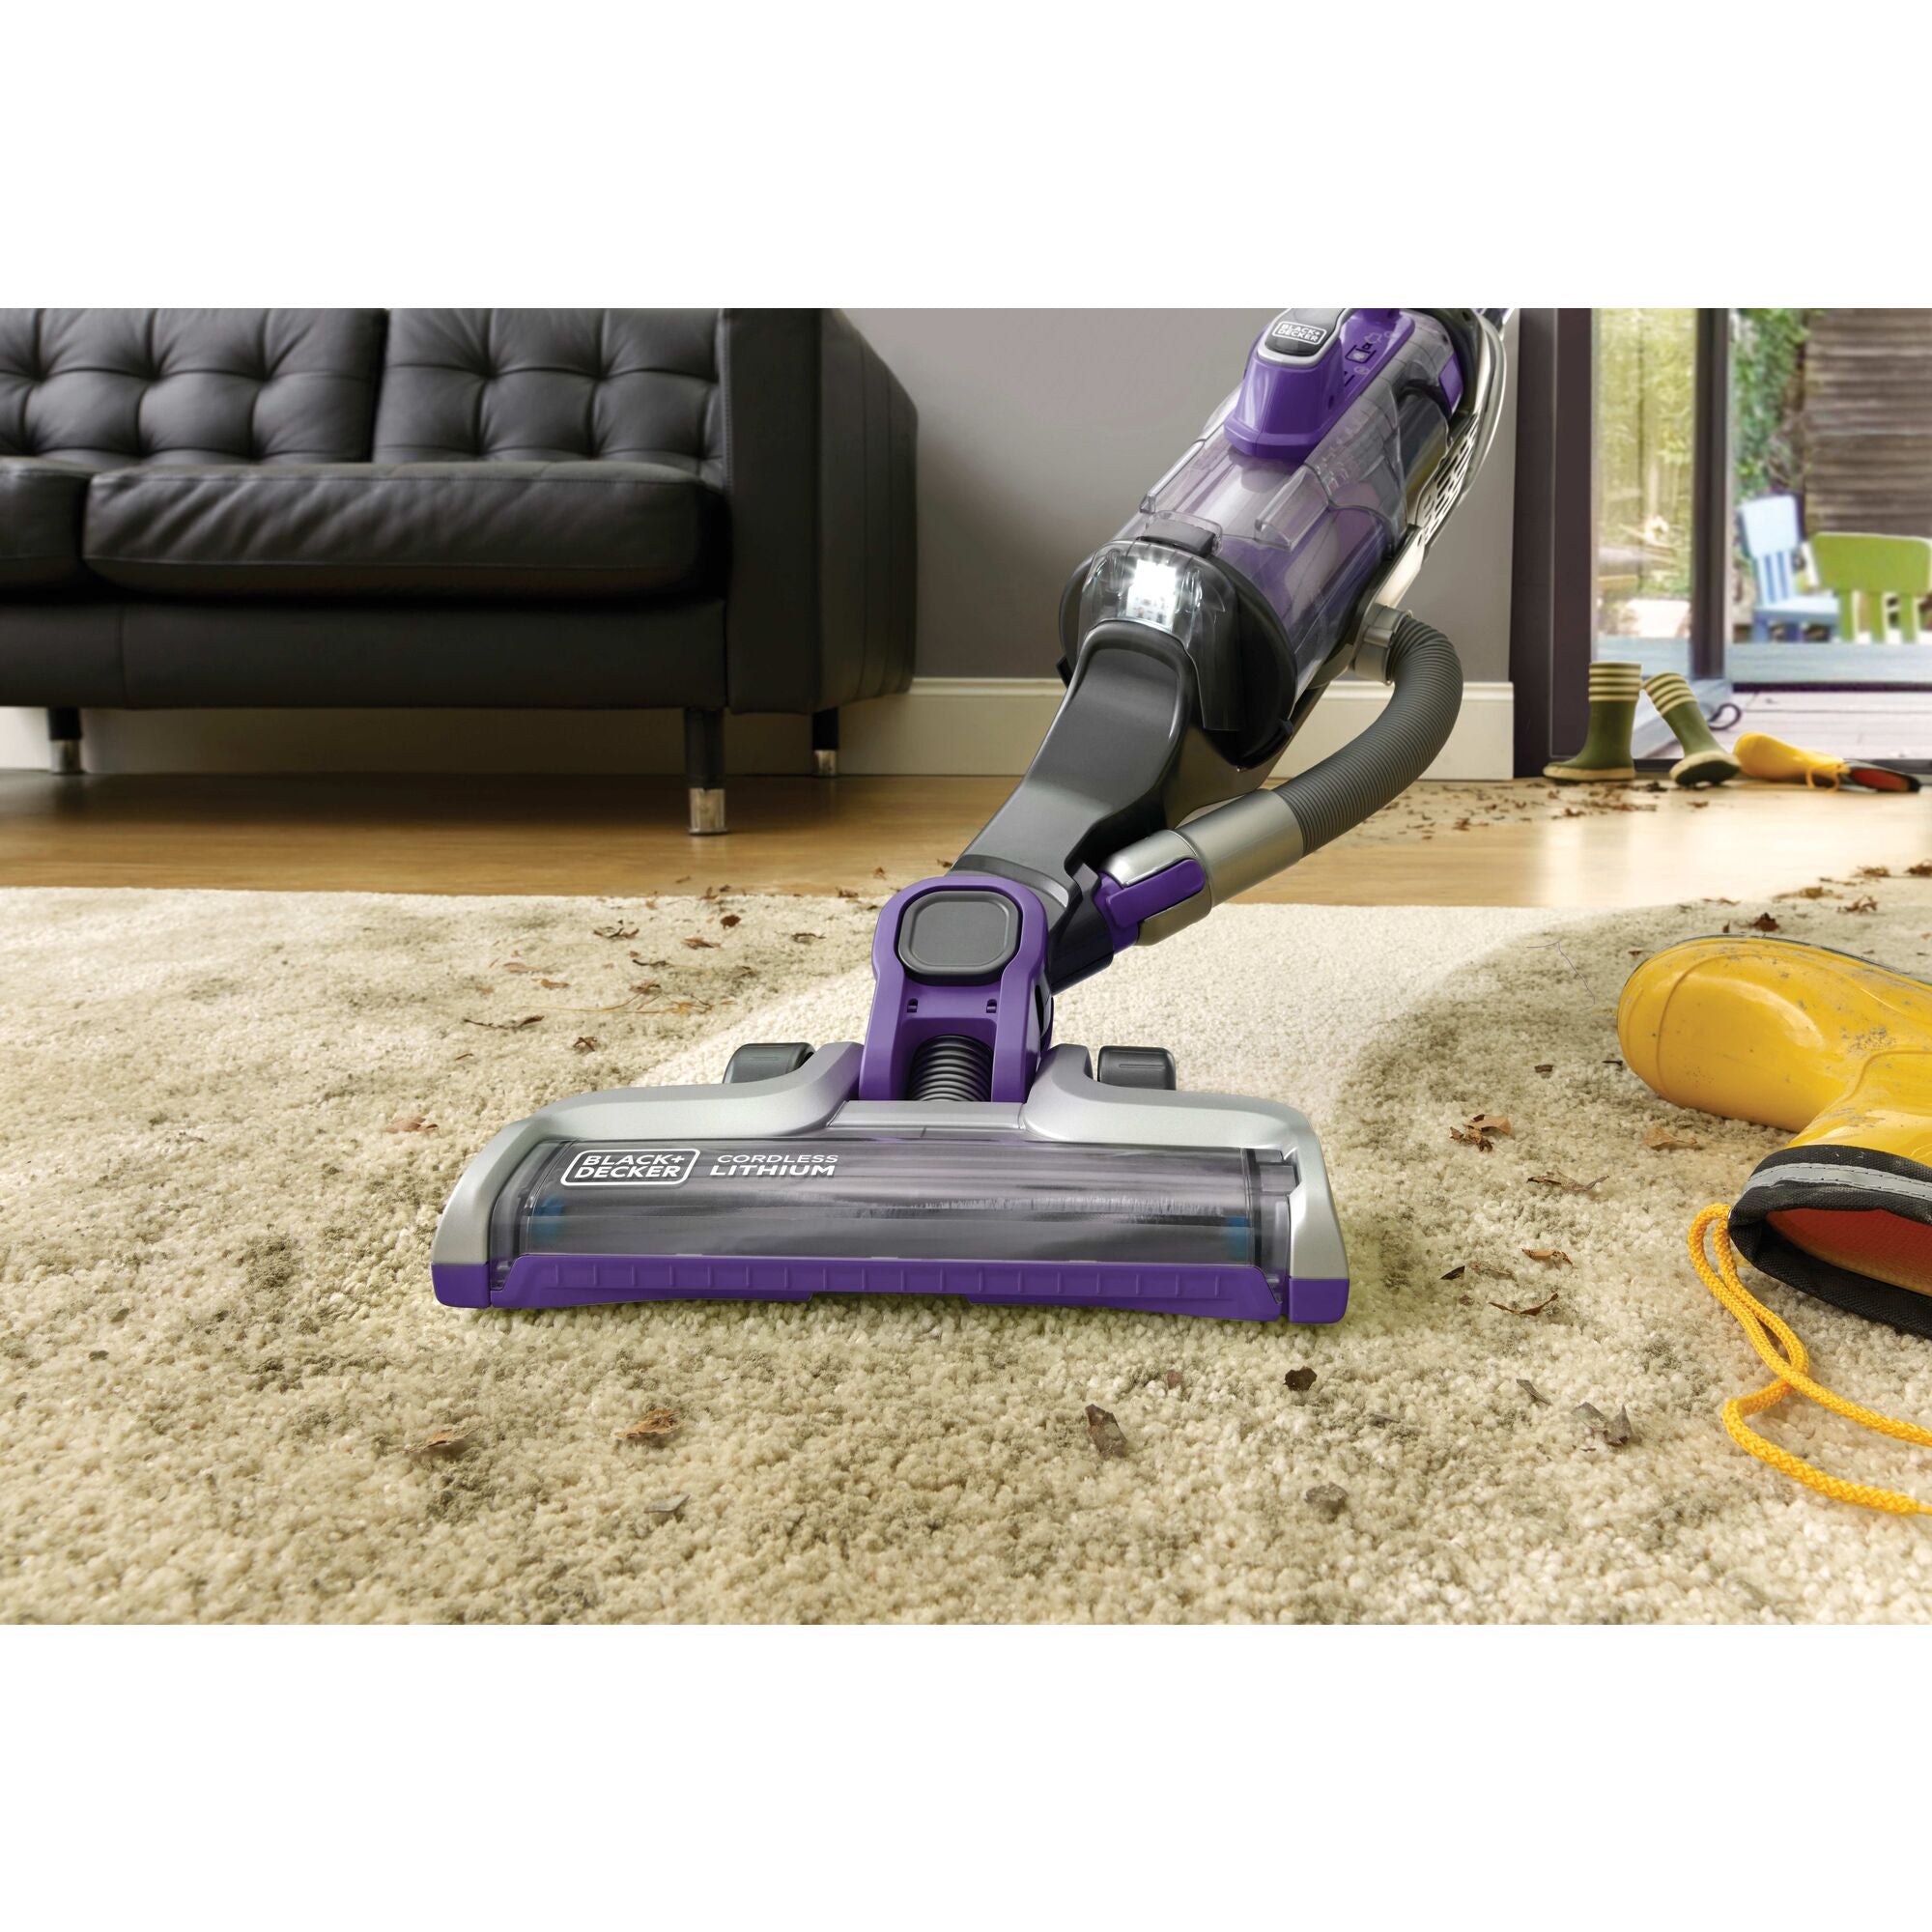 POWERSERIES™ Pro Pet Cordless Stick Vacuum Cleaner | BLACK+DECKER